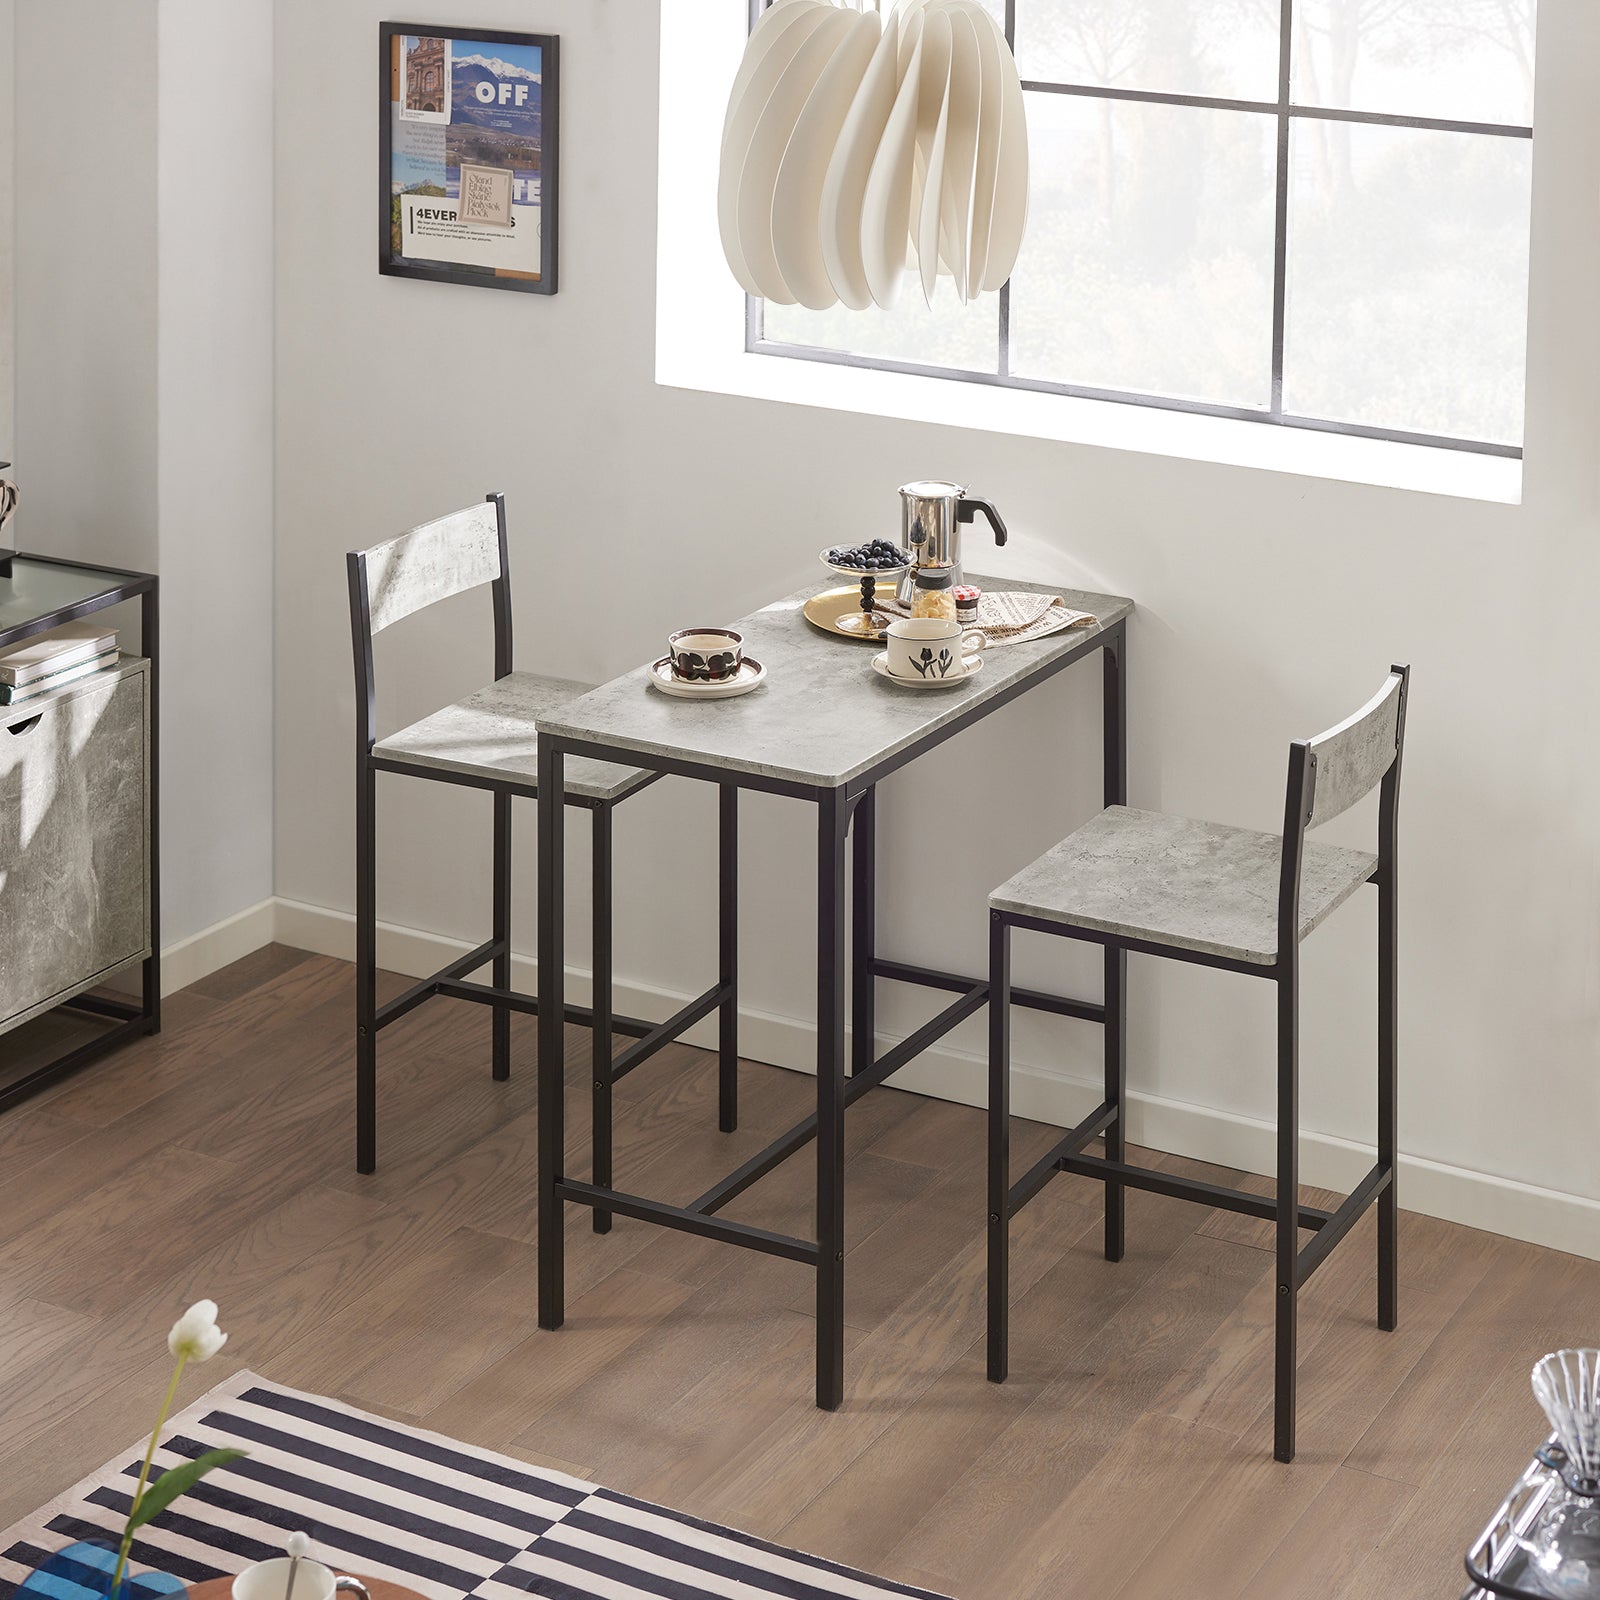 SoBuy OGT03-HG, Bar Set-1 Bar Table and 2 Stools, 3 Pieces Home Kitchen Breakfast Bar Set Furniture Dining Set